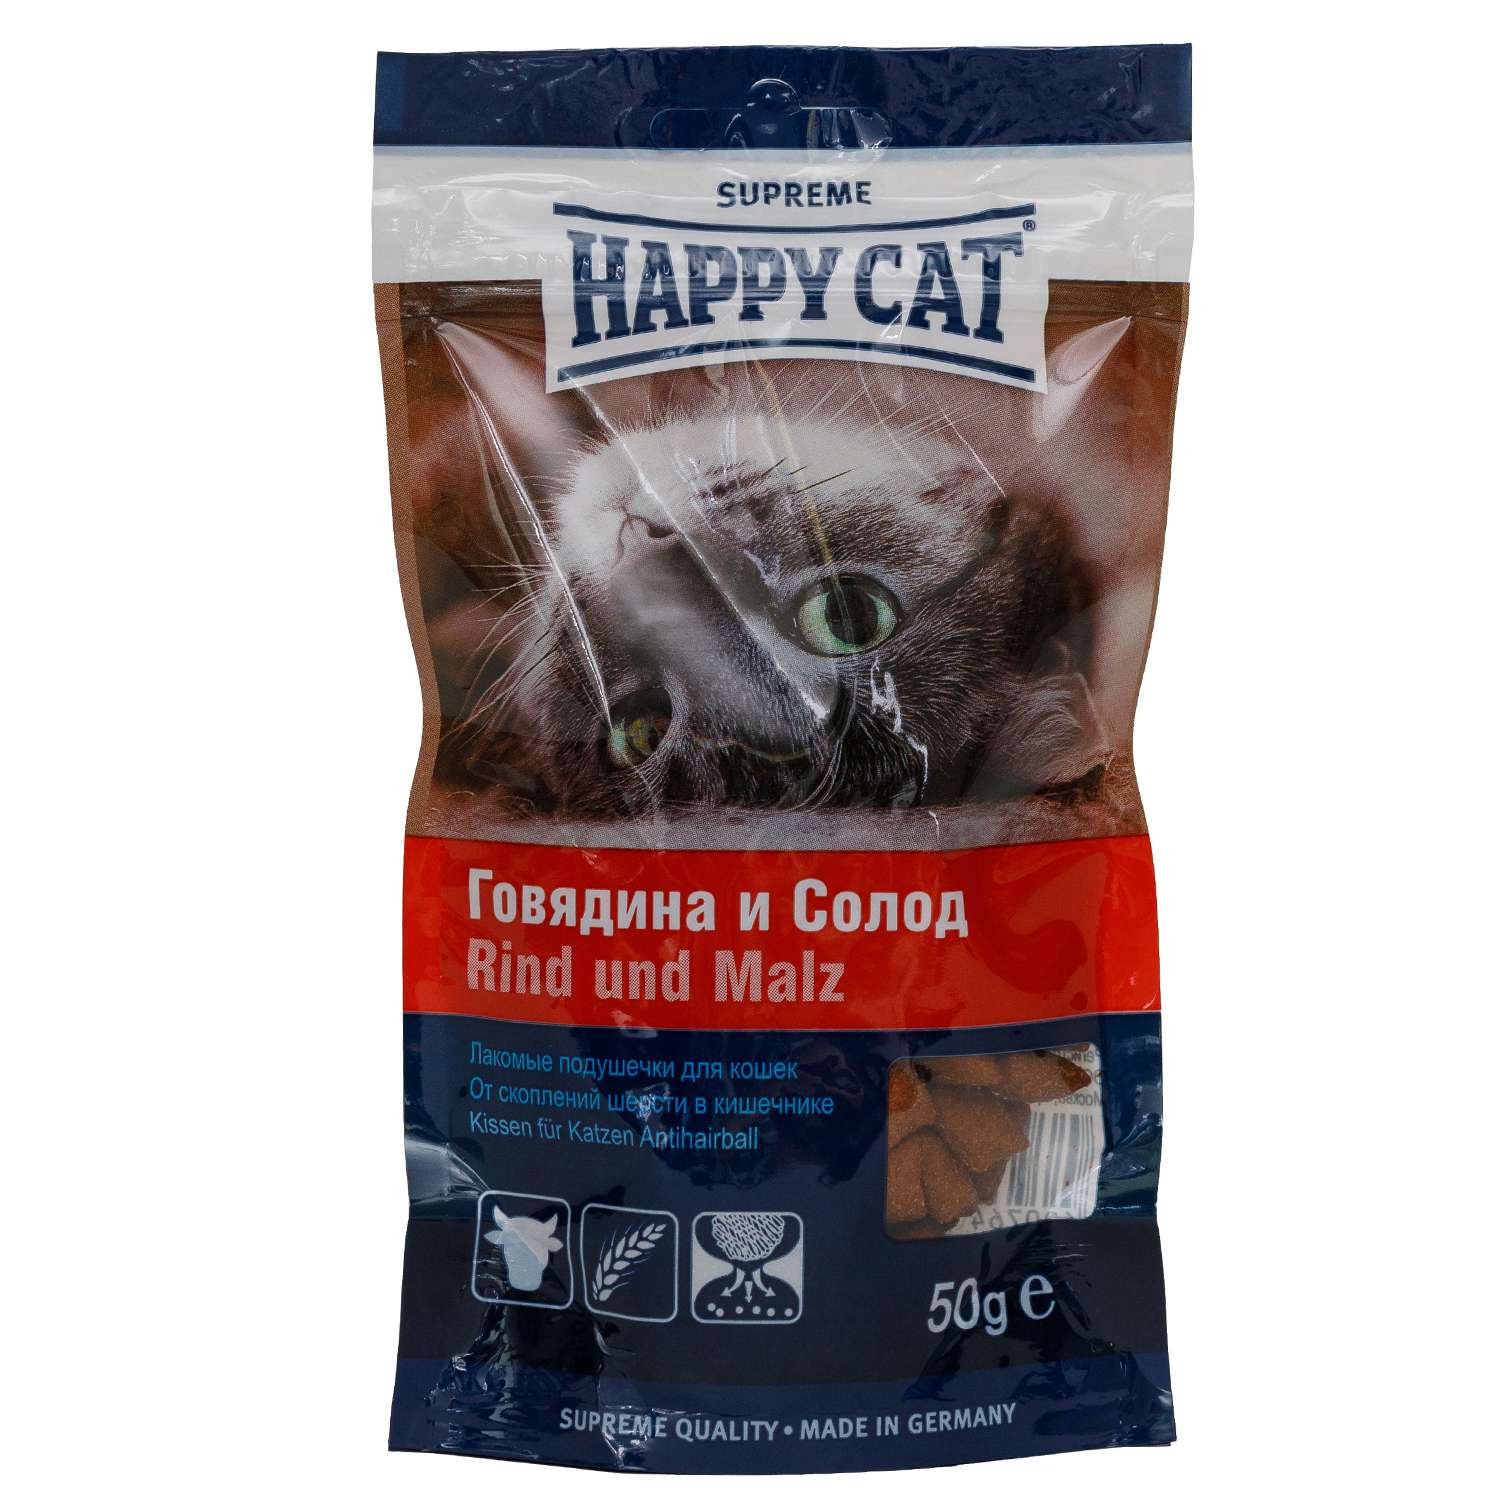 Лакомство для кошек Happy Cat Подушечки говядина-солод 50г - фото 1